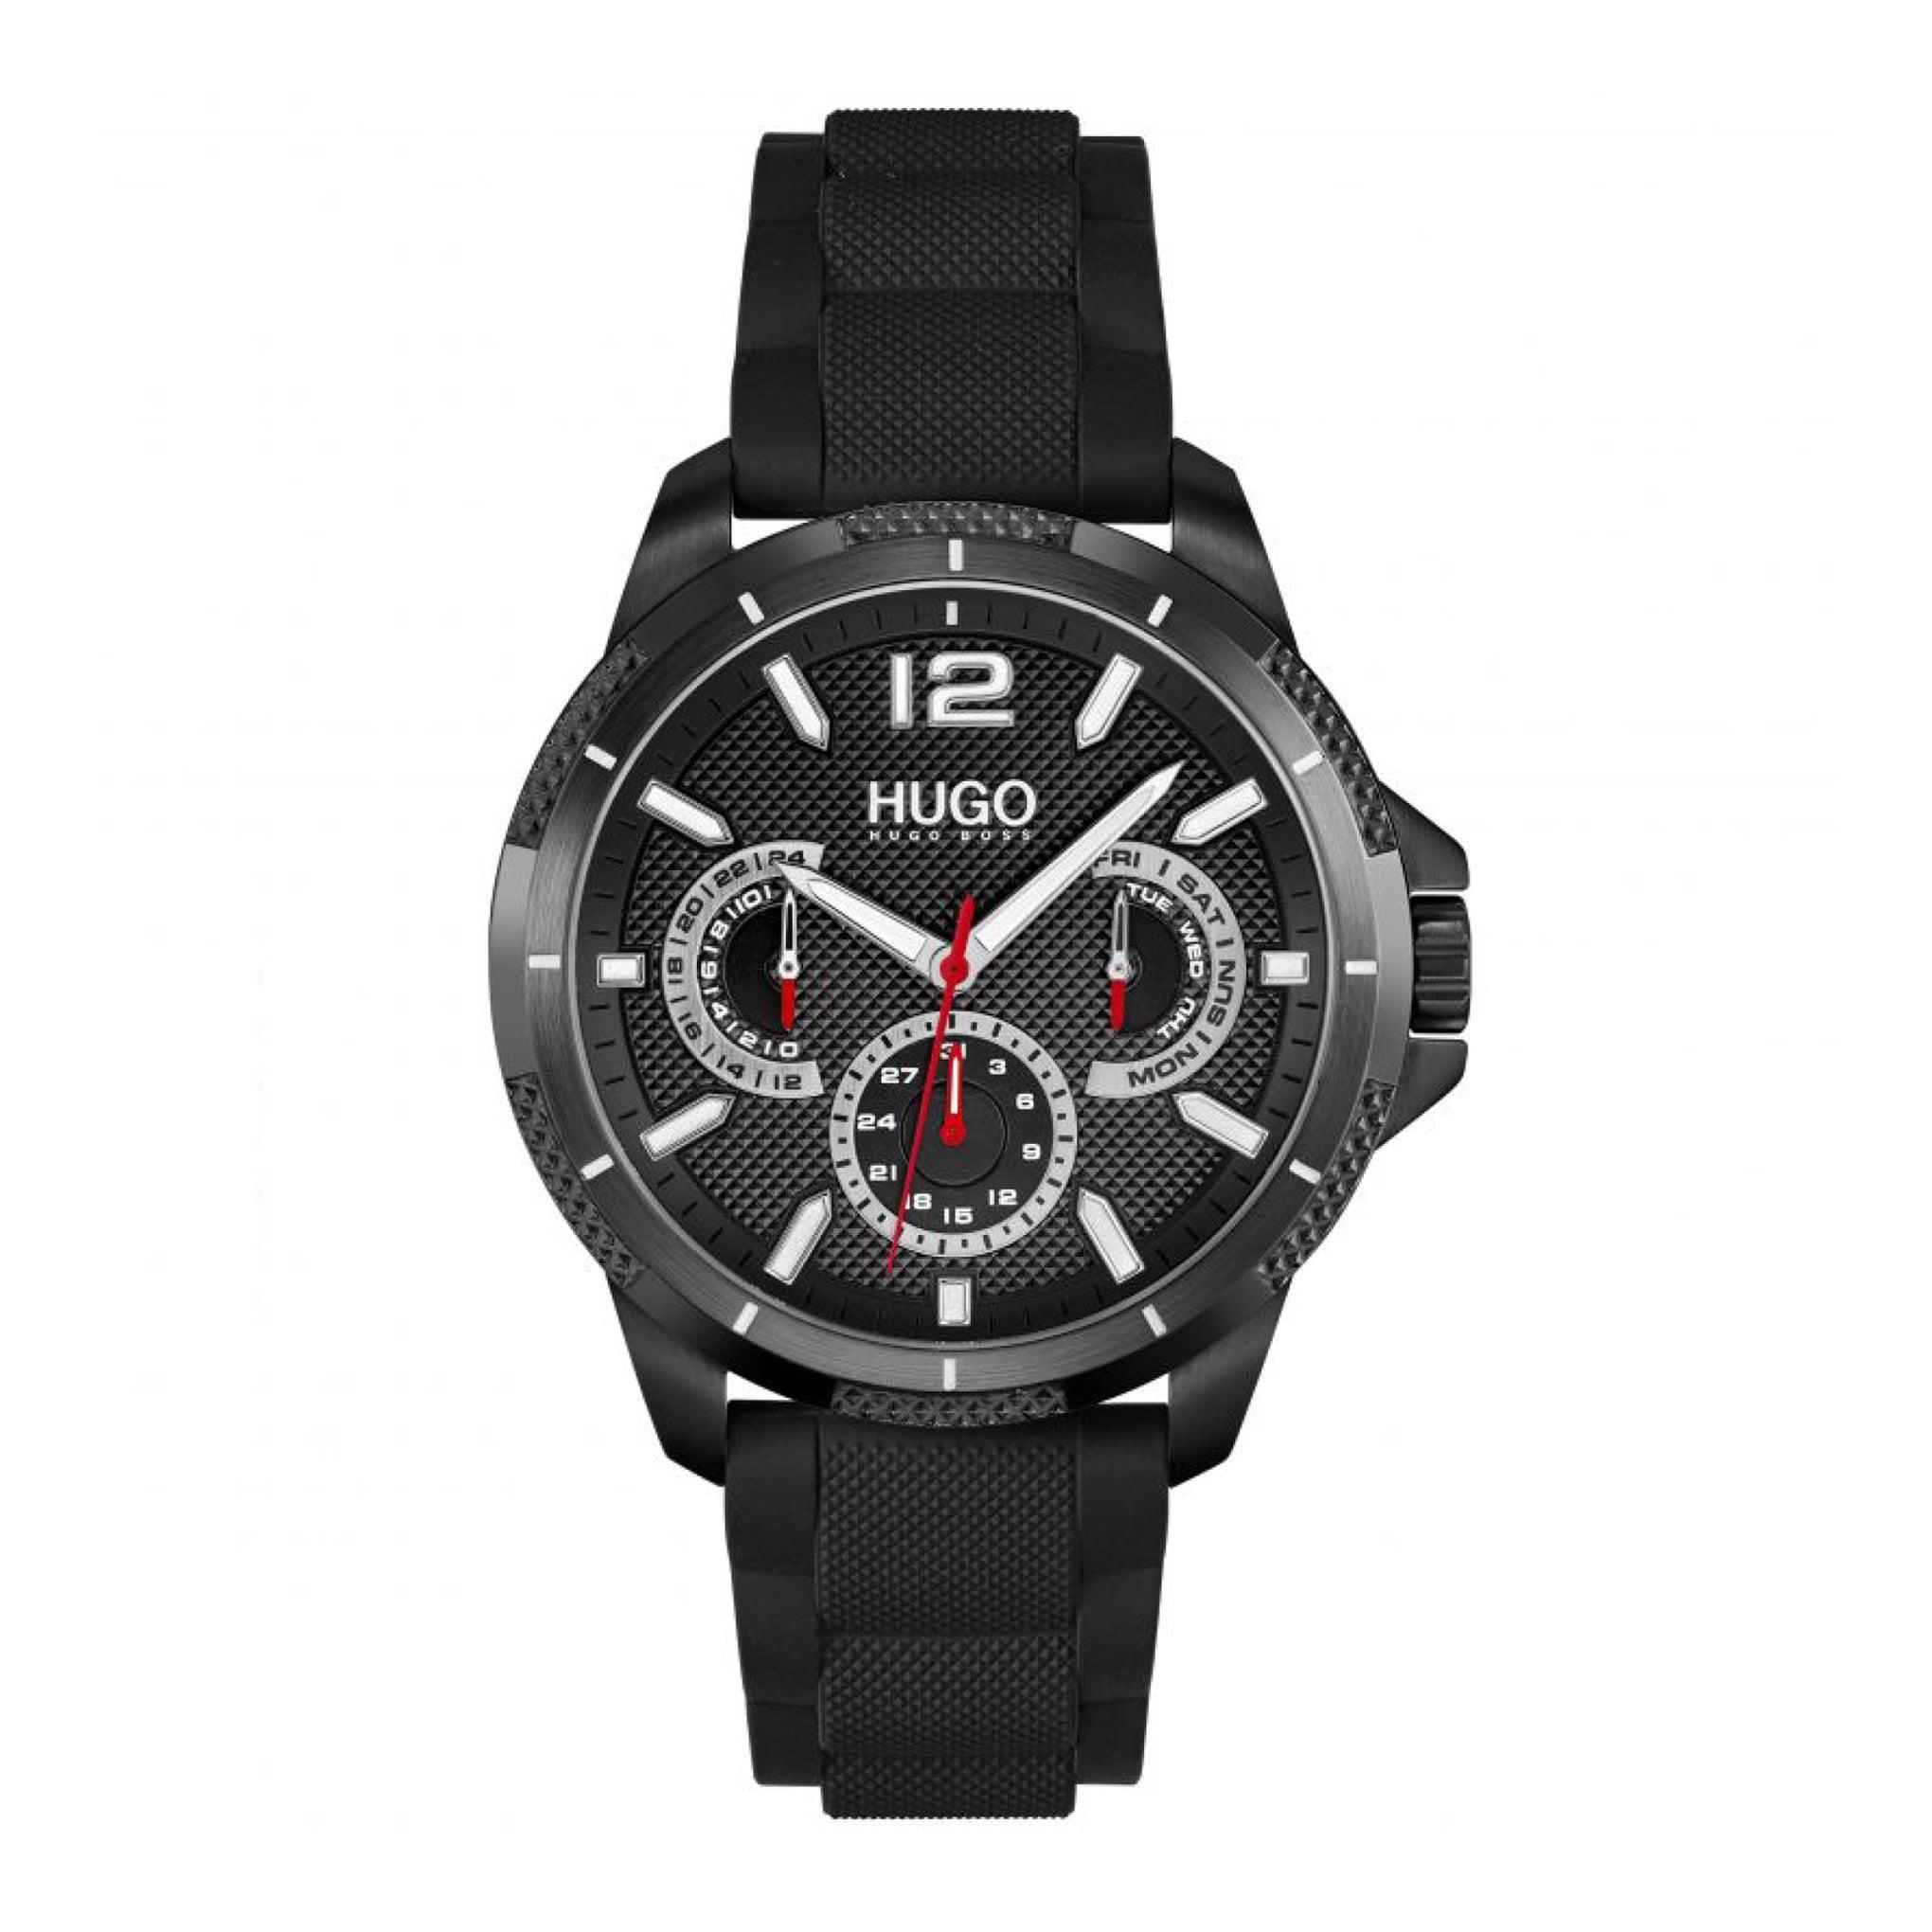 ساعة يد رجالية - أسود - بحزام سيليكوني أسود هوغو بوس Hugo Boss Men's Analog Quartz Watch With Silicone Strap